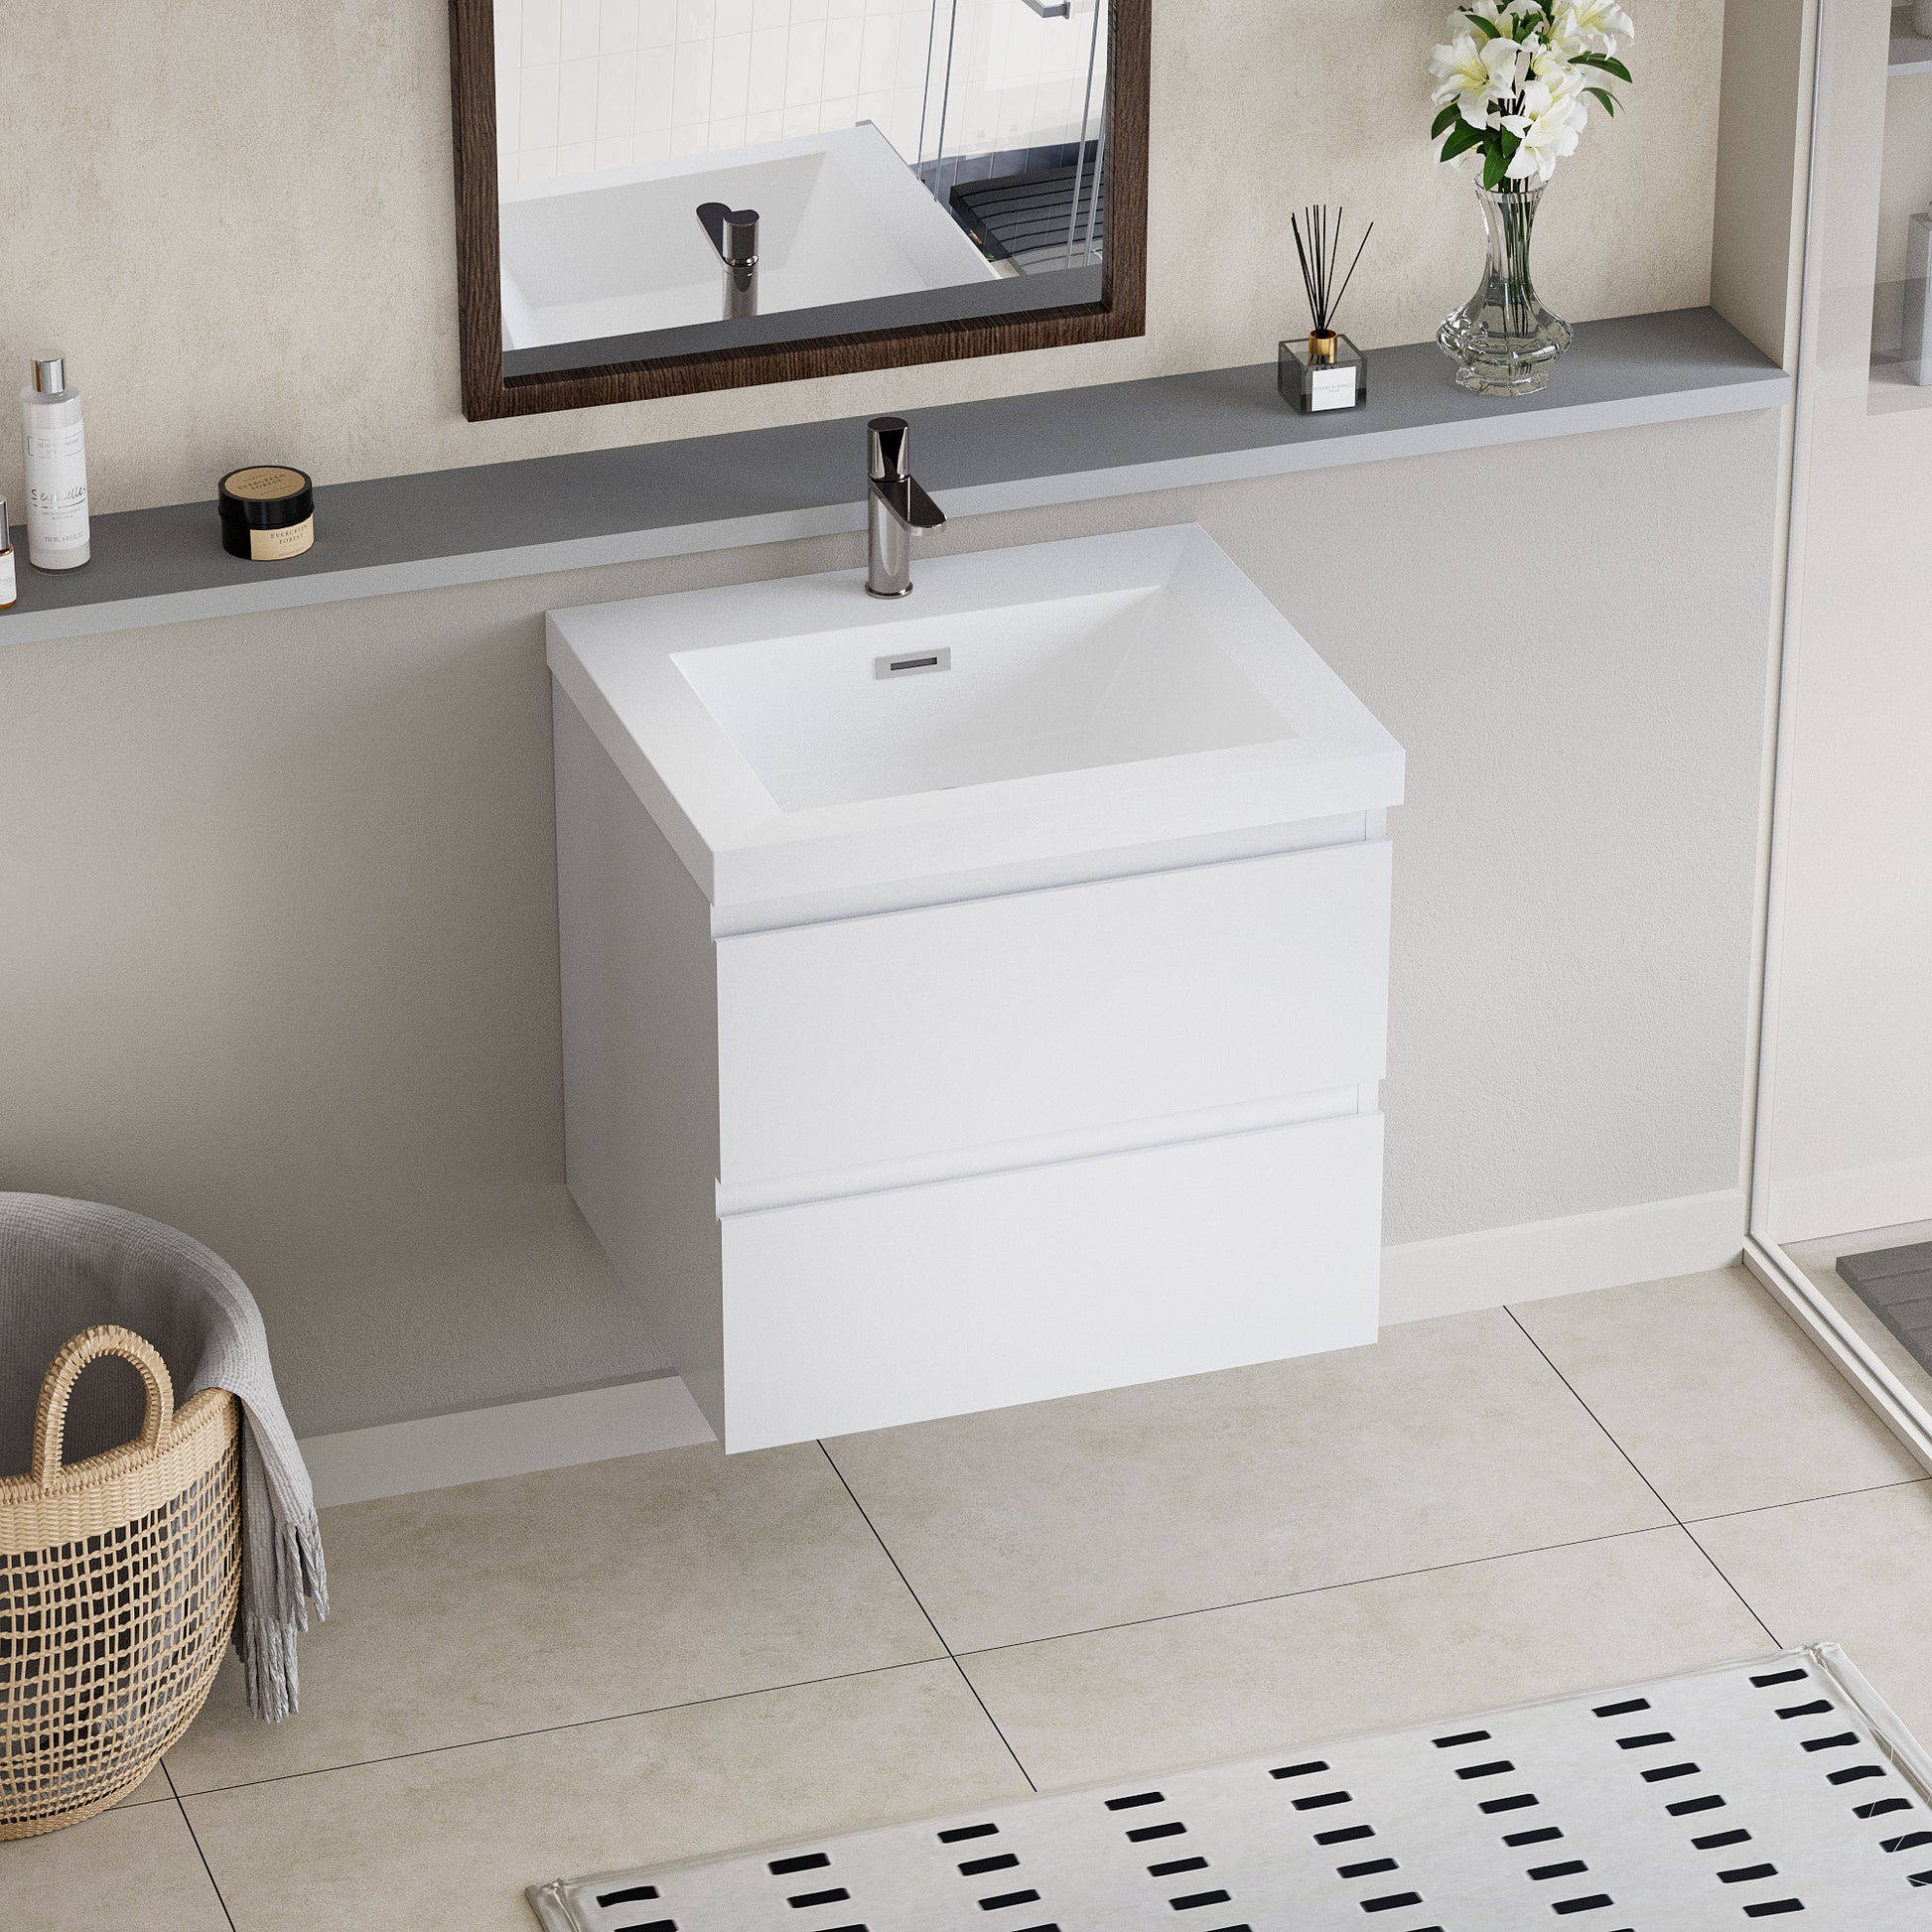 24" Floating Bathroom Vanity with Sink, Modern Wall white-mdf